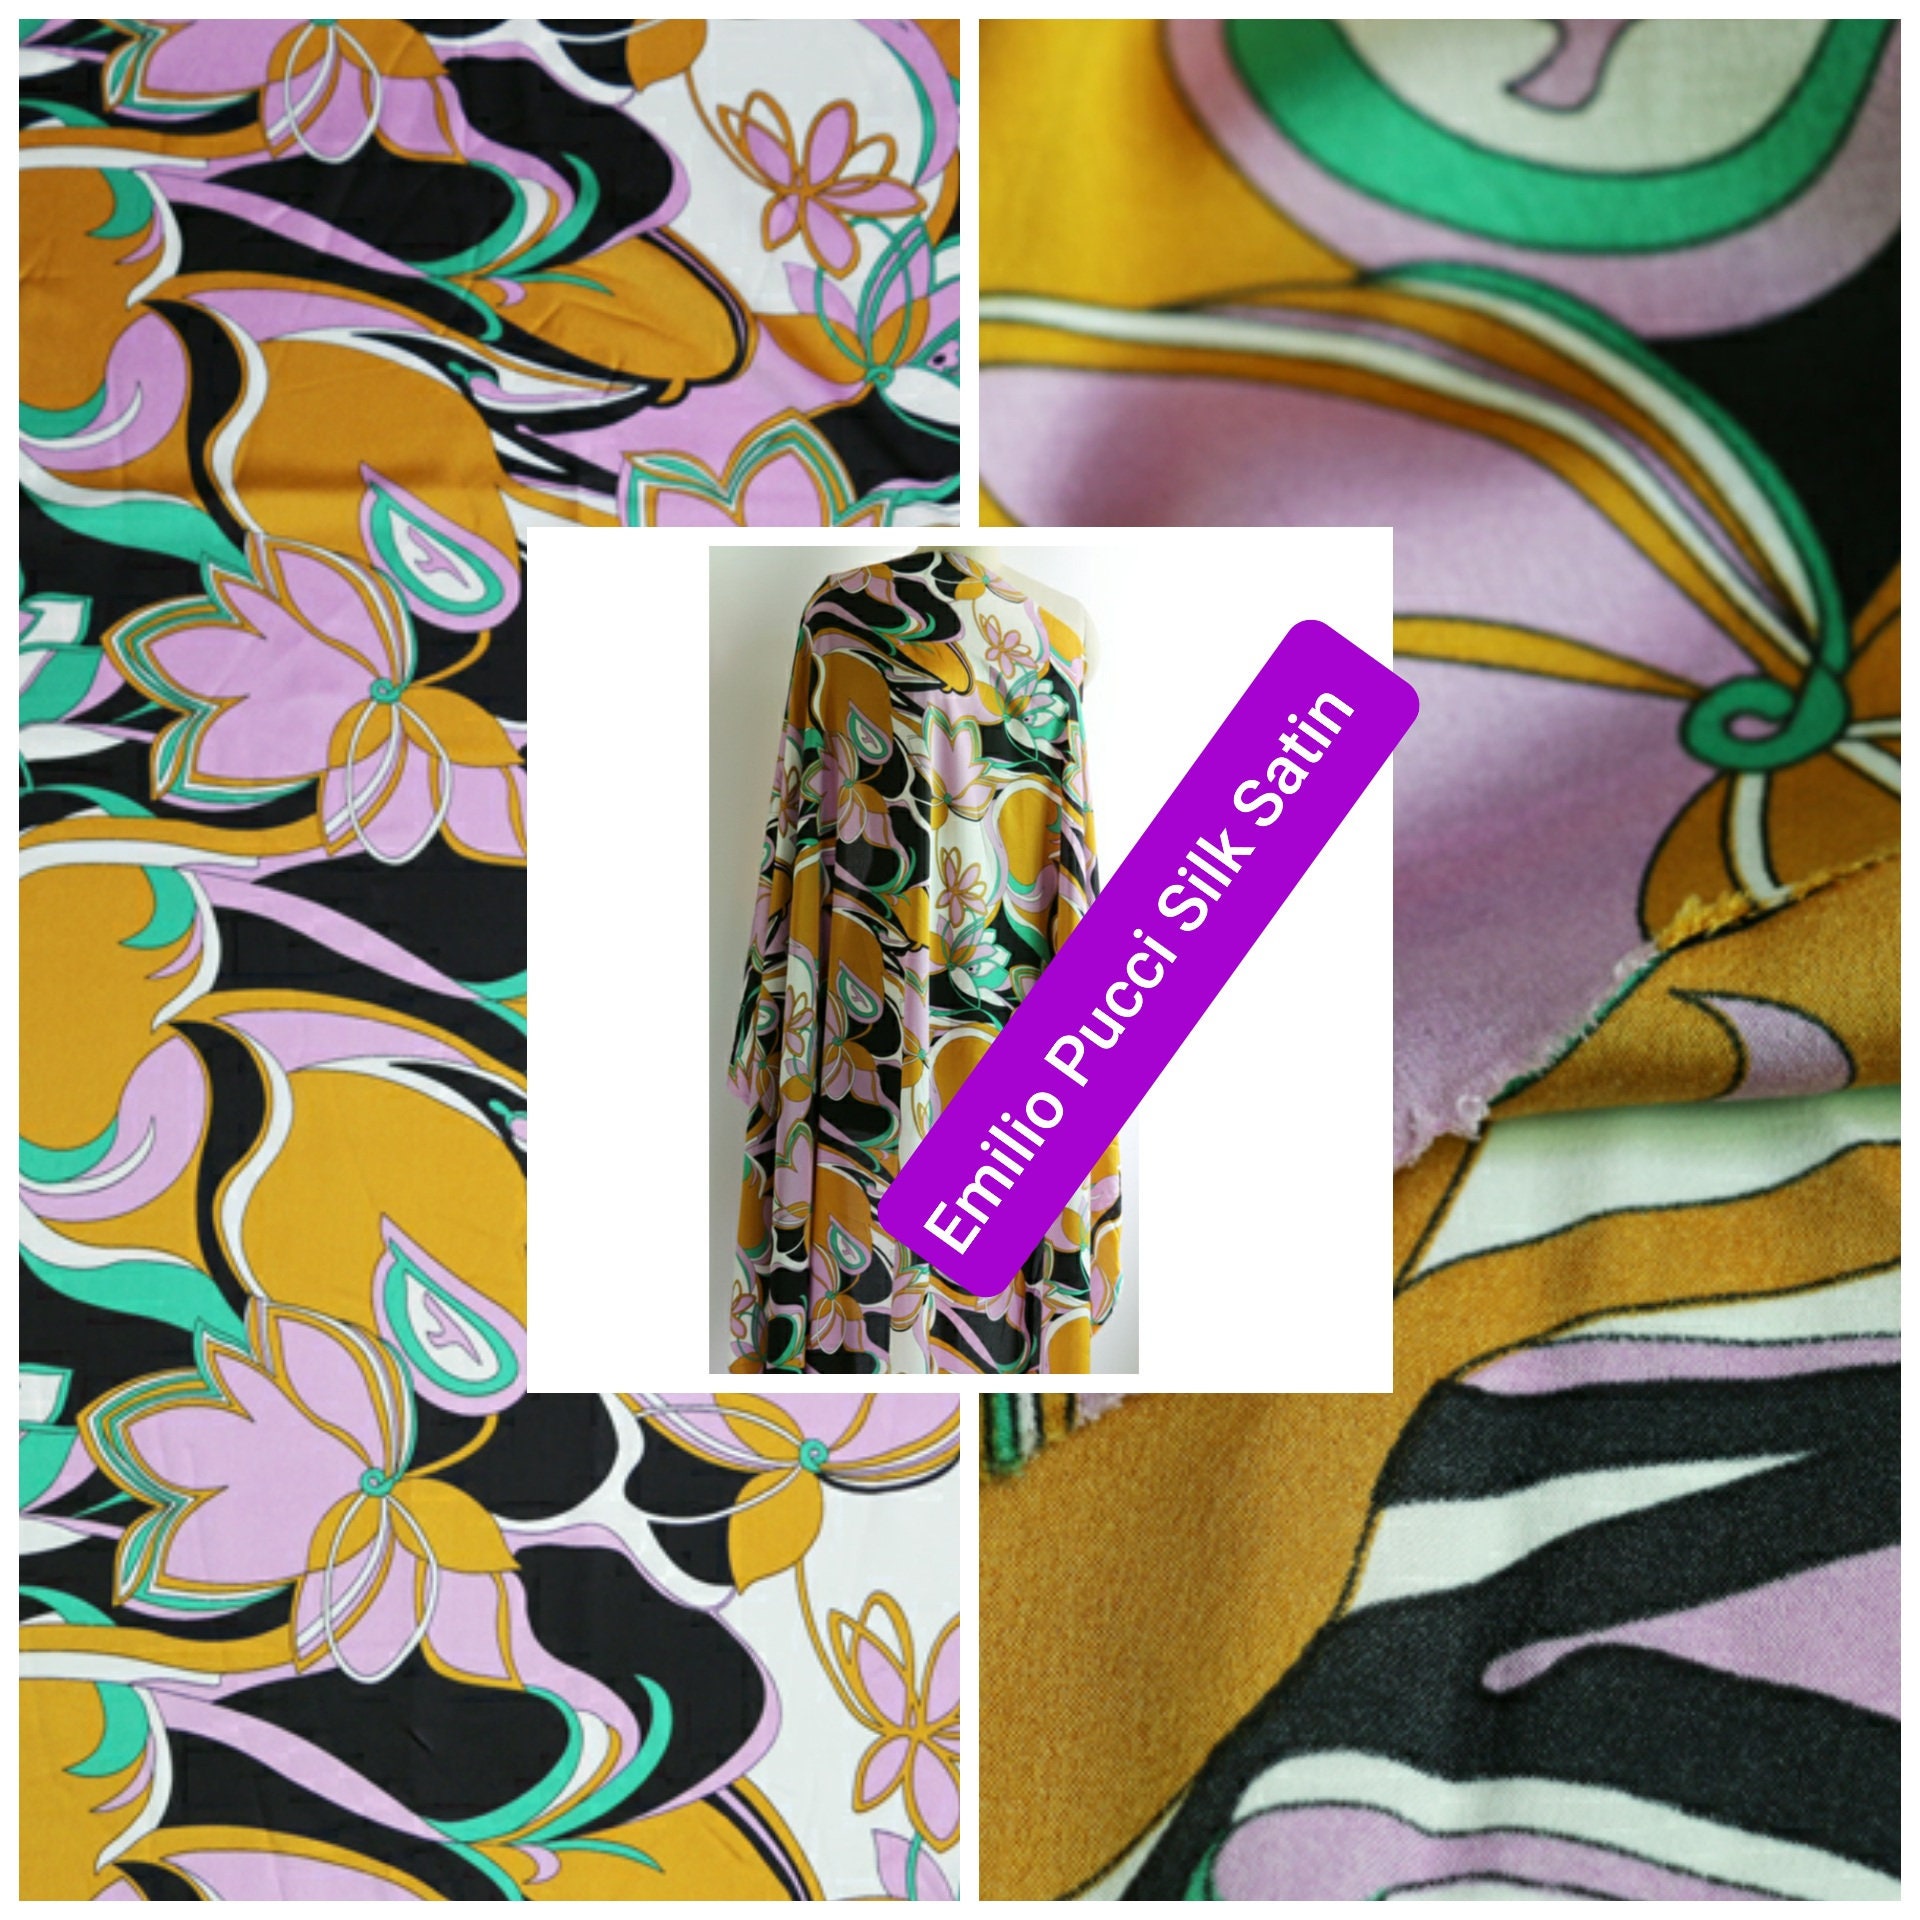 Pucci Silk Satin Crepe Fabric/Floral Design Tunic Fabric/Designer